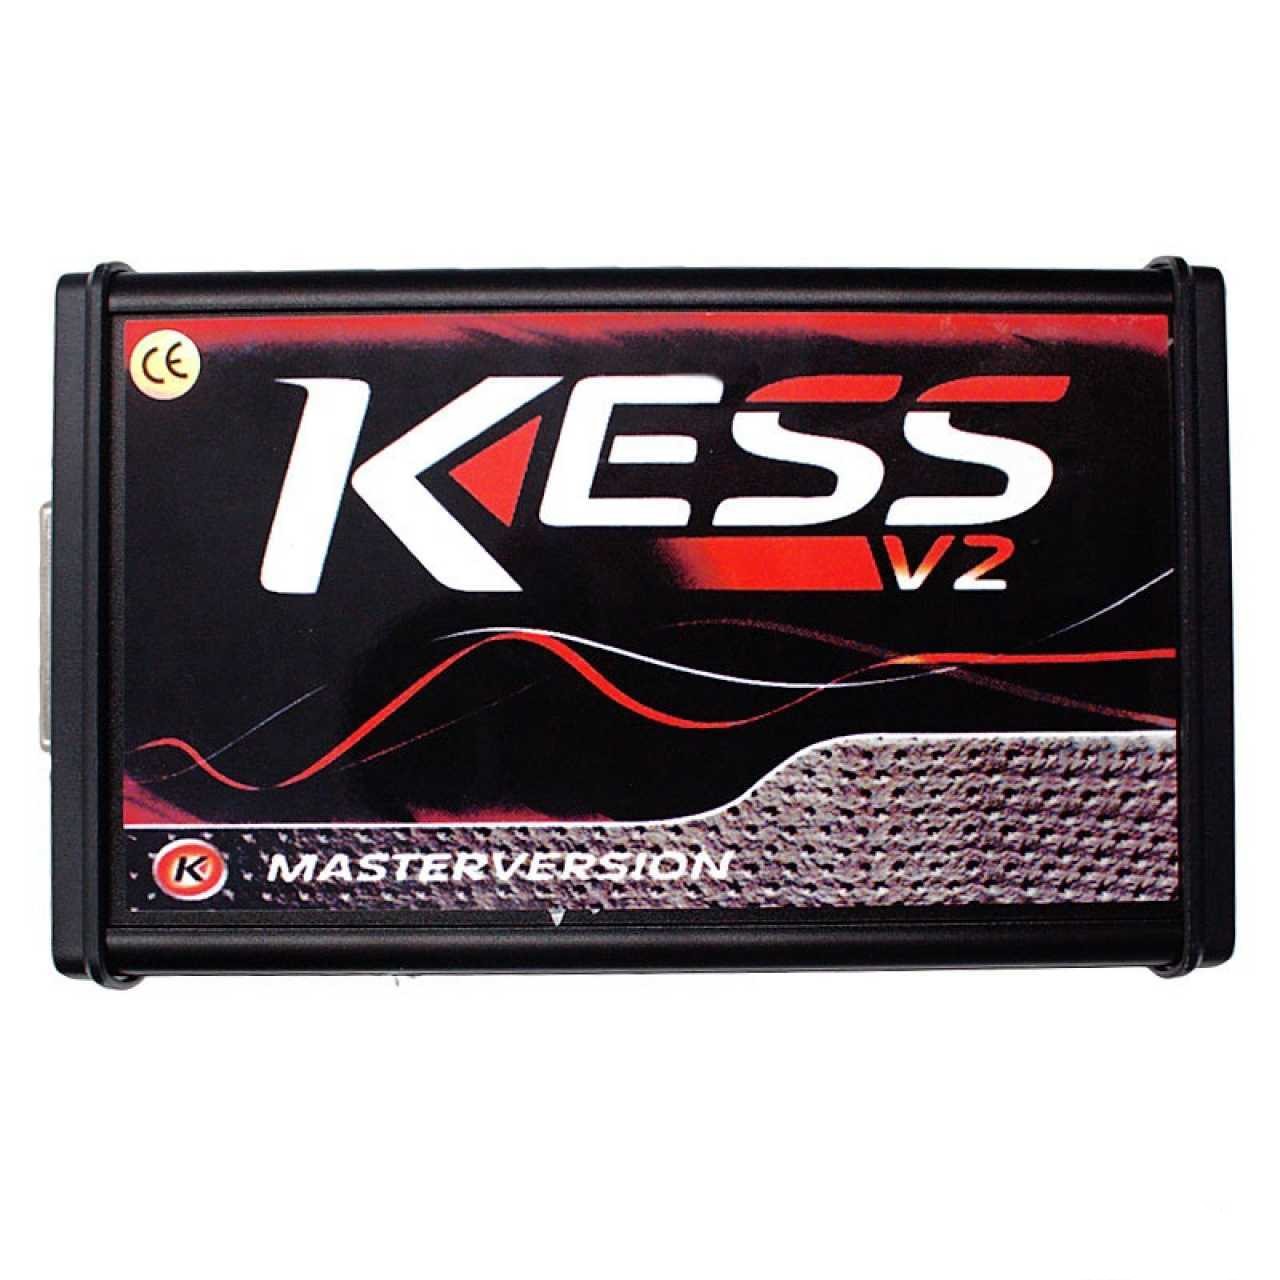 Kit De Sintonización De Chips Maestros/Programador Llaves Kess V2